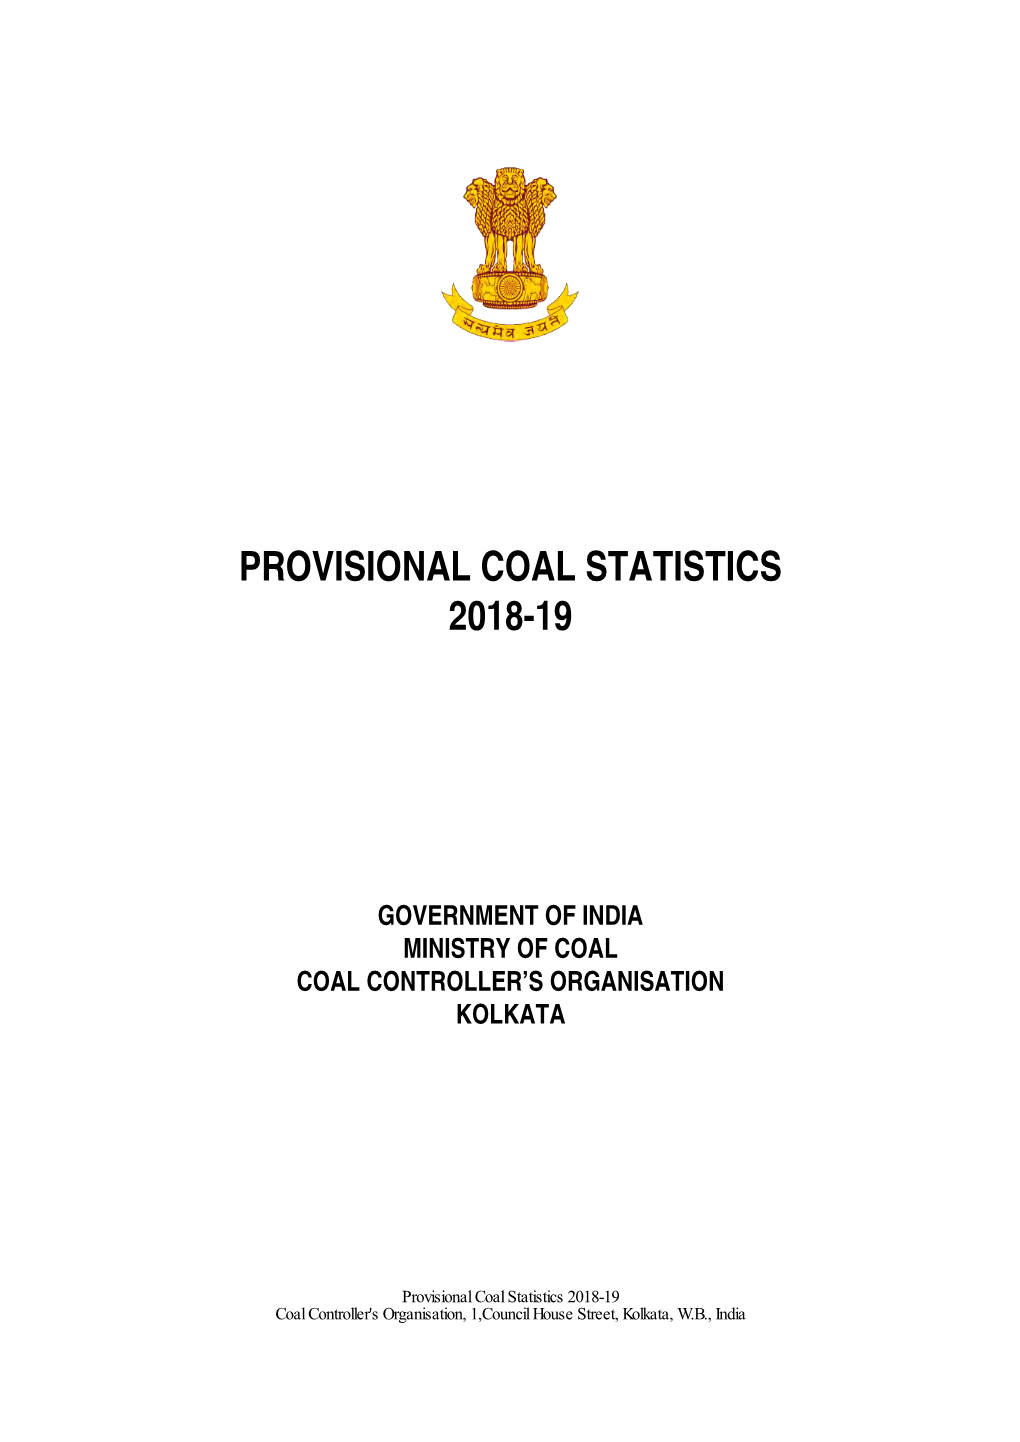 Provisional Coal Statistics 2018-19